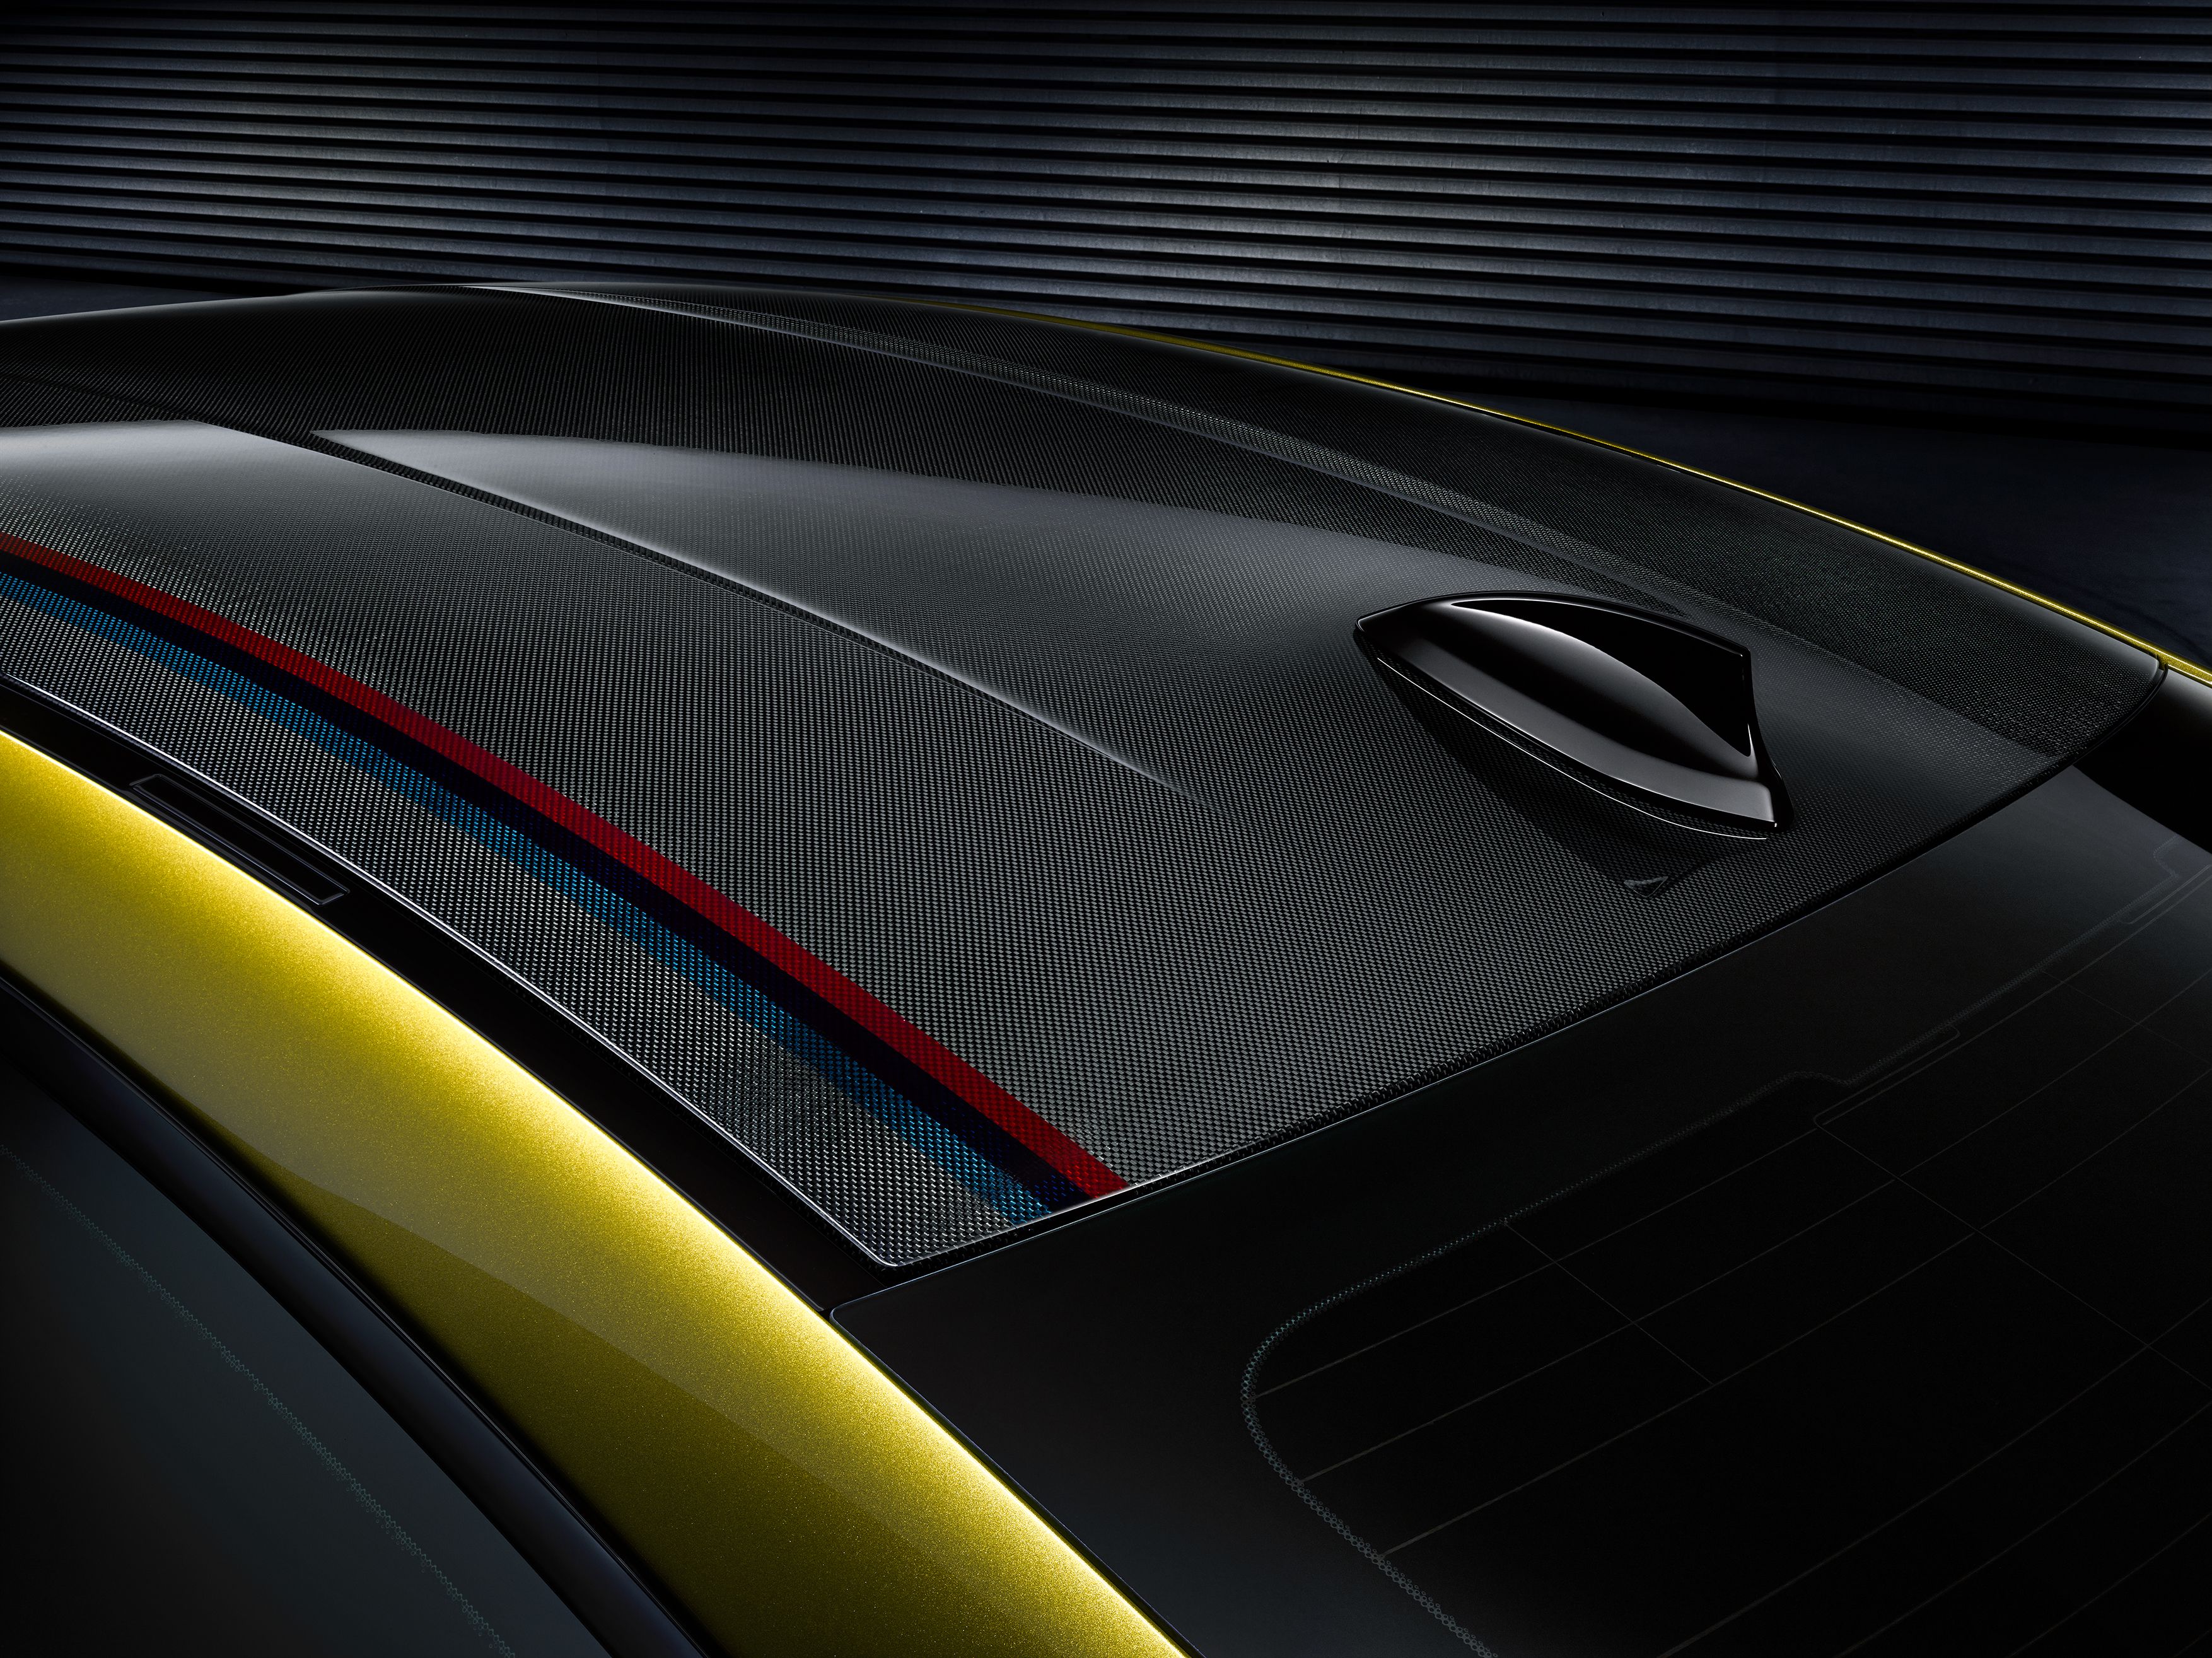 2014 BMW Concept M4 Coupe